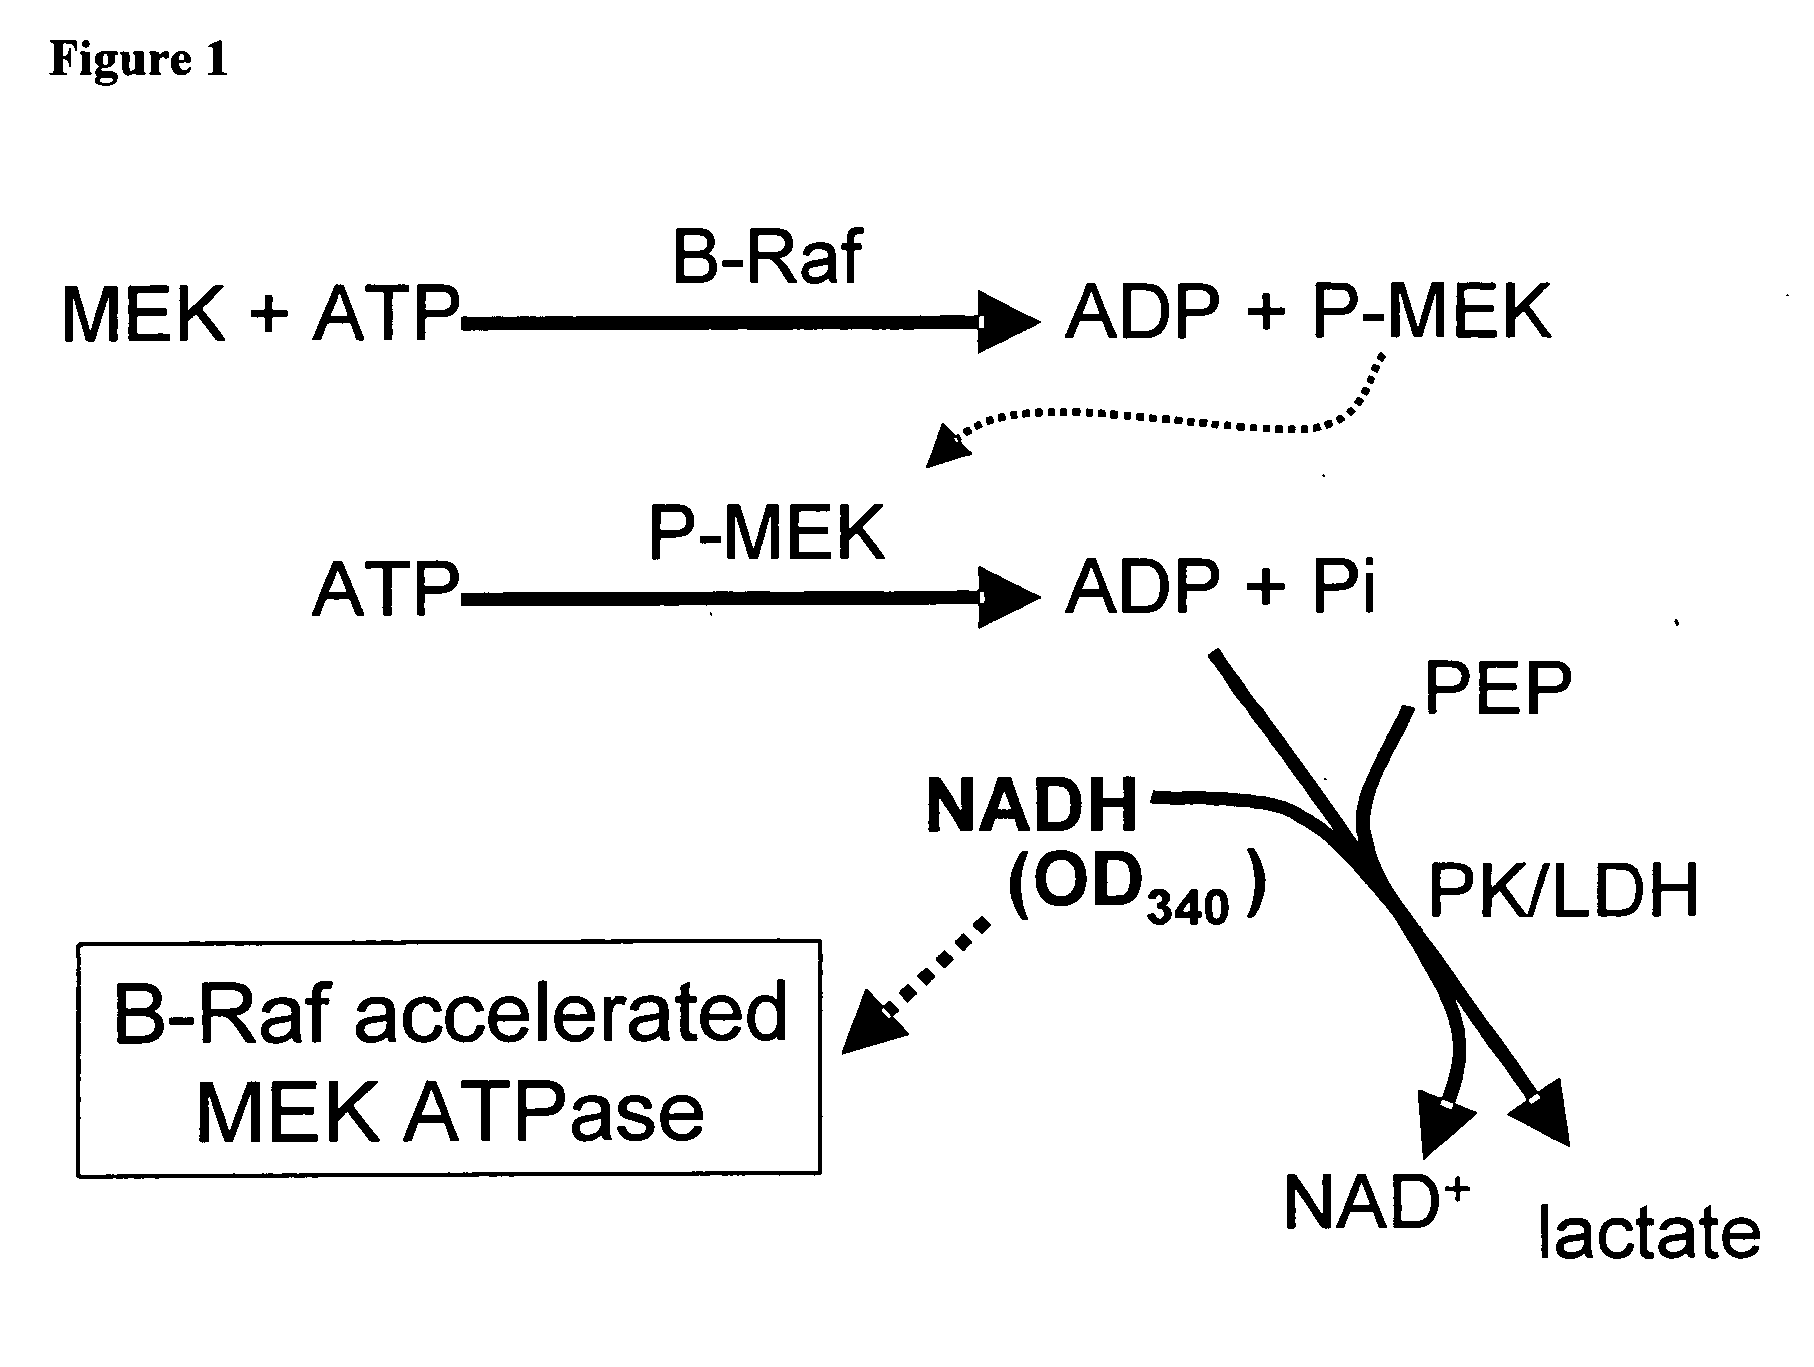 Assay for B-Raf activity based on intrinsic MEK ATPase activity